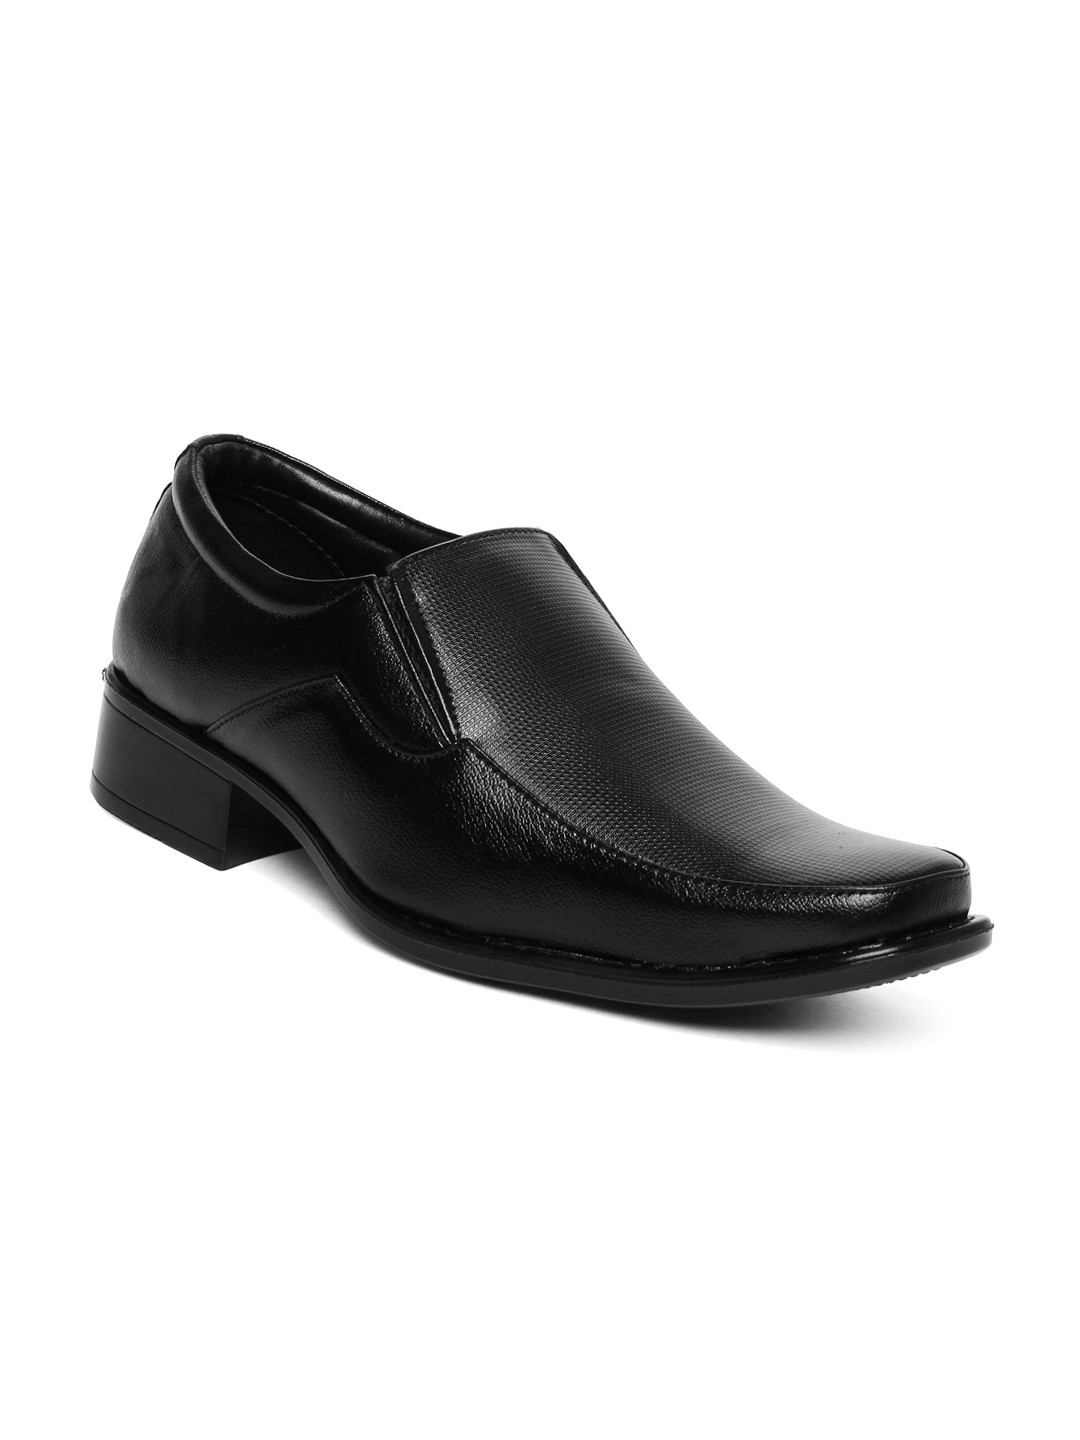 black shoes semi formal